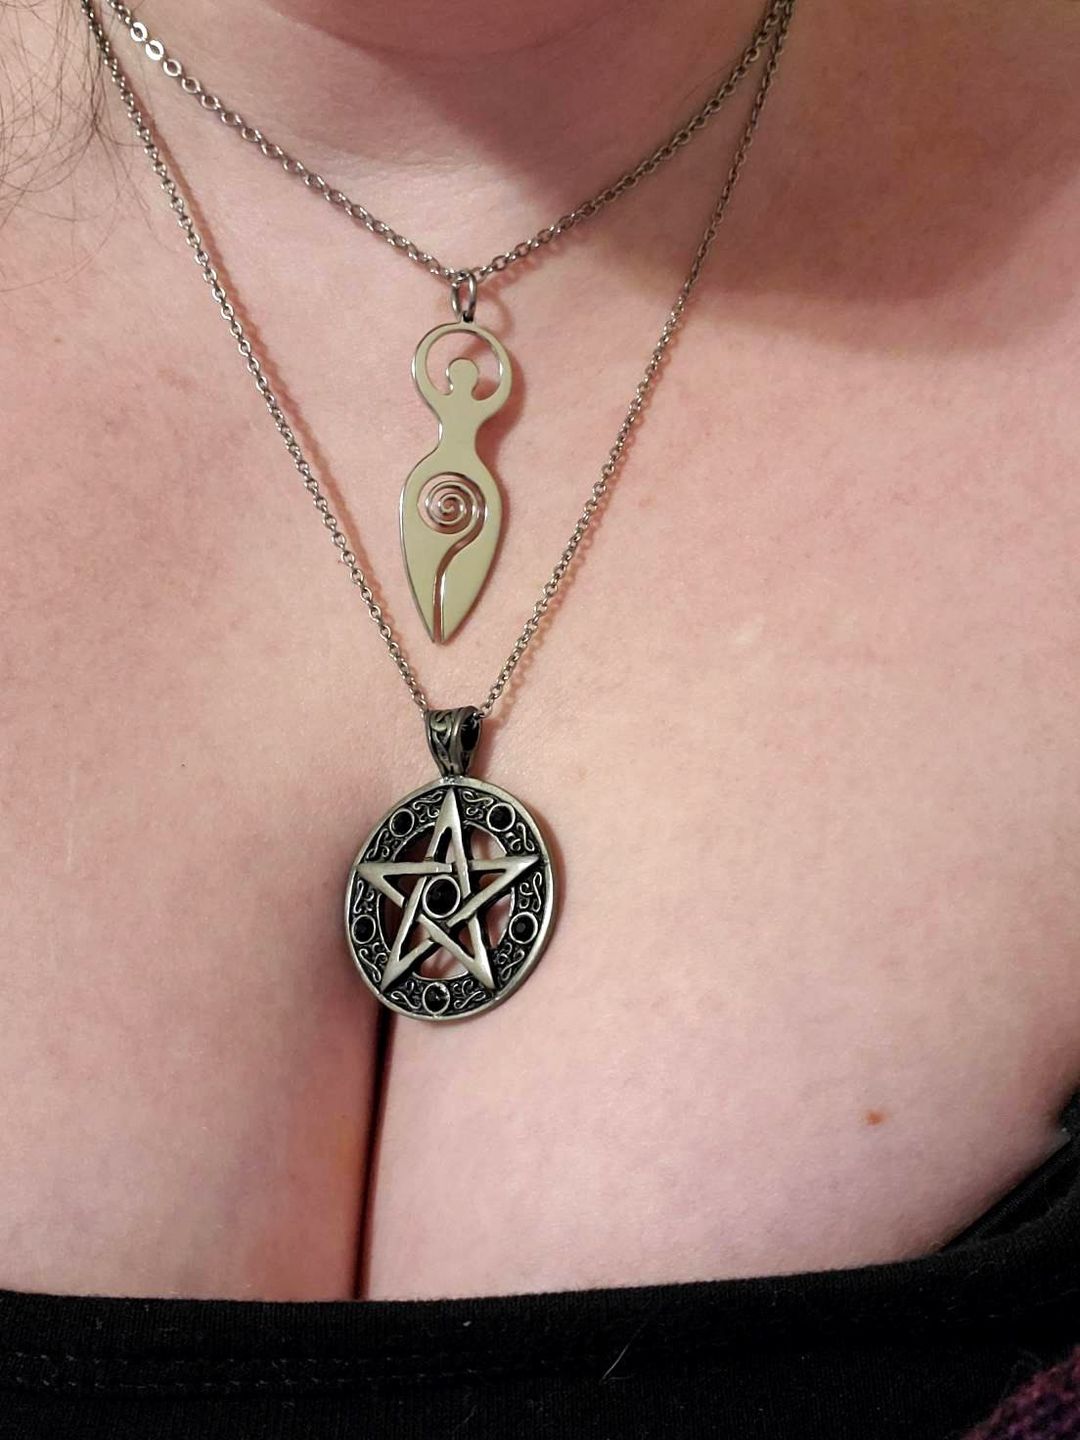 Ashton K. review of Spiral Goddess Symbol Necklace
